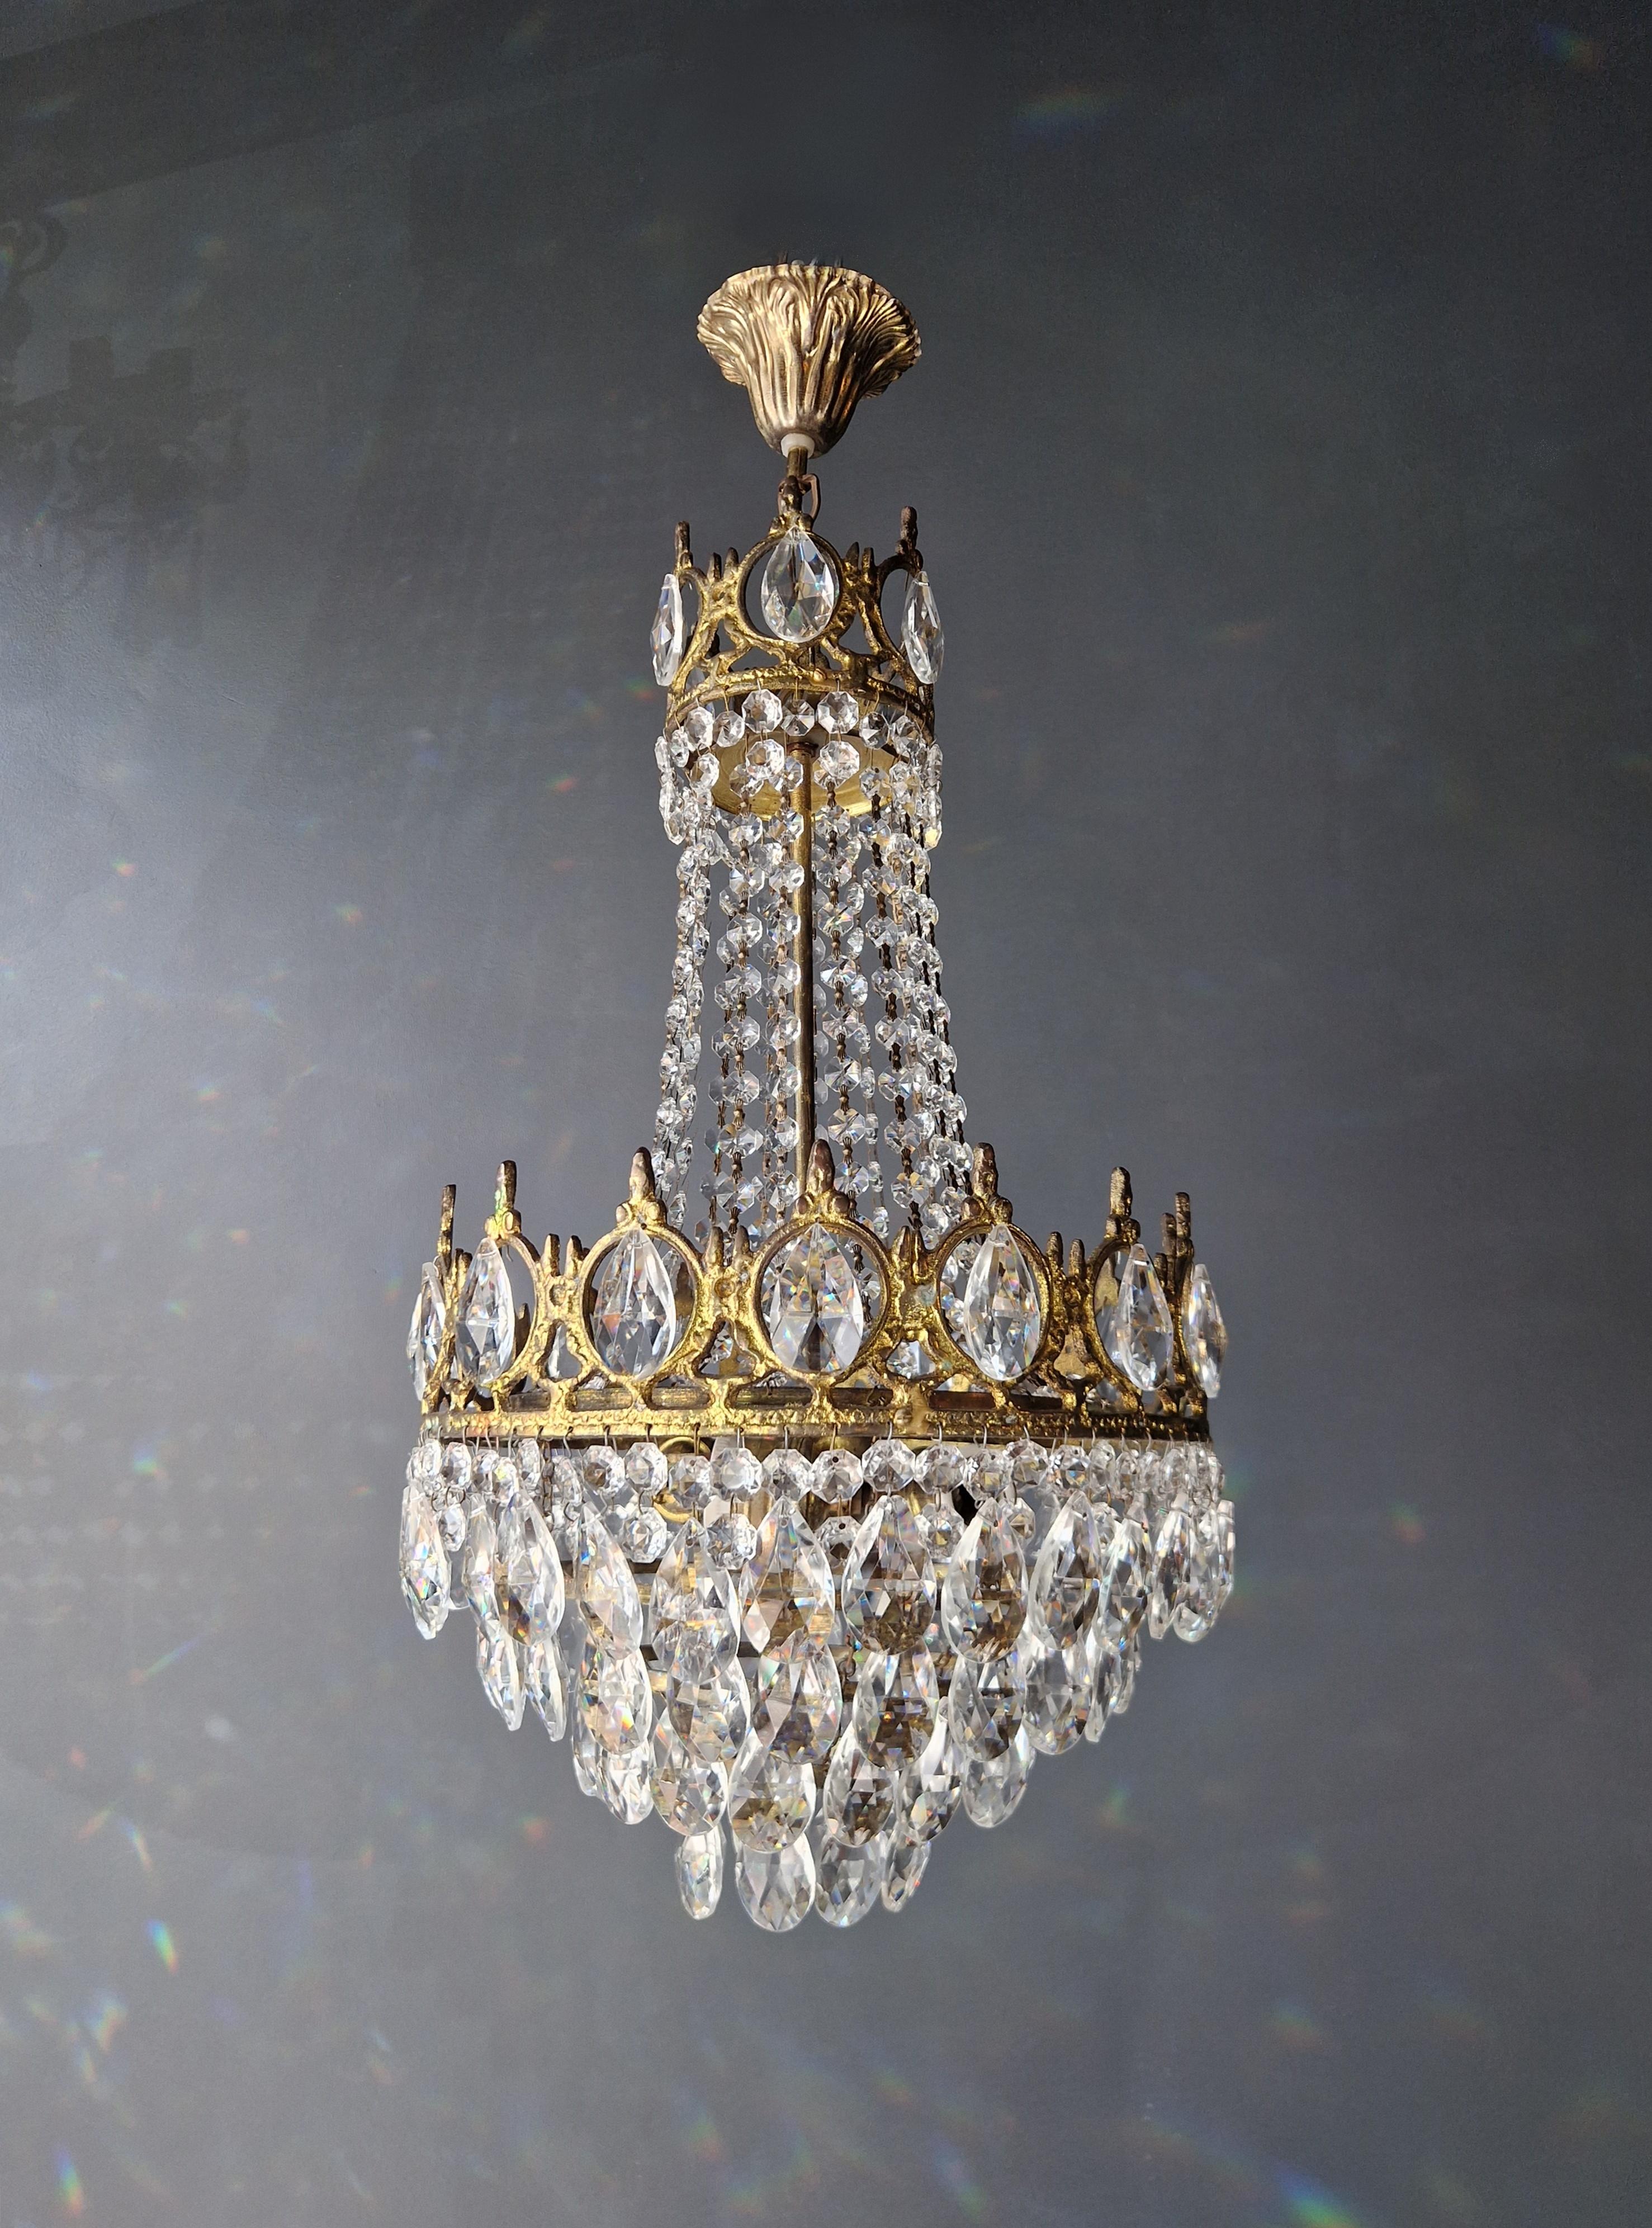 Hand-Knotted Basket Chandelier Brass Empire Crystal Lustre Ceiling Antique Art Nouveau Gold For Sale